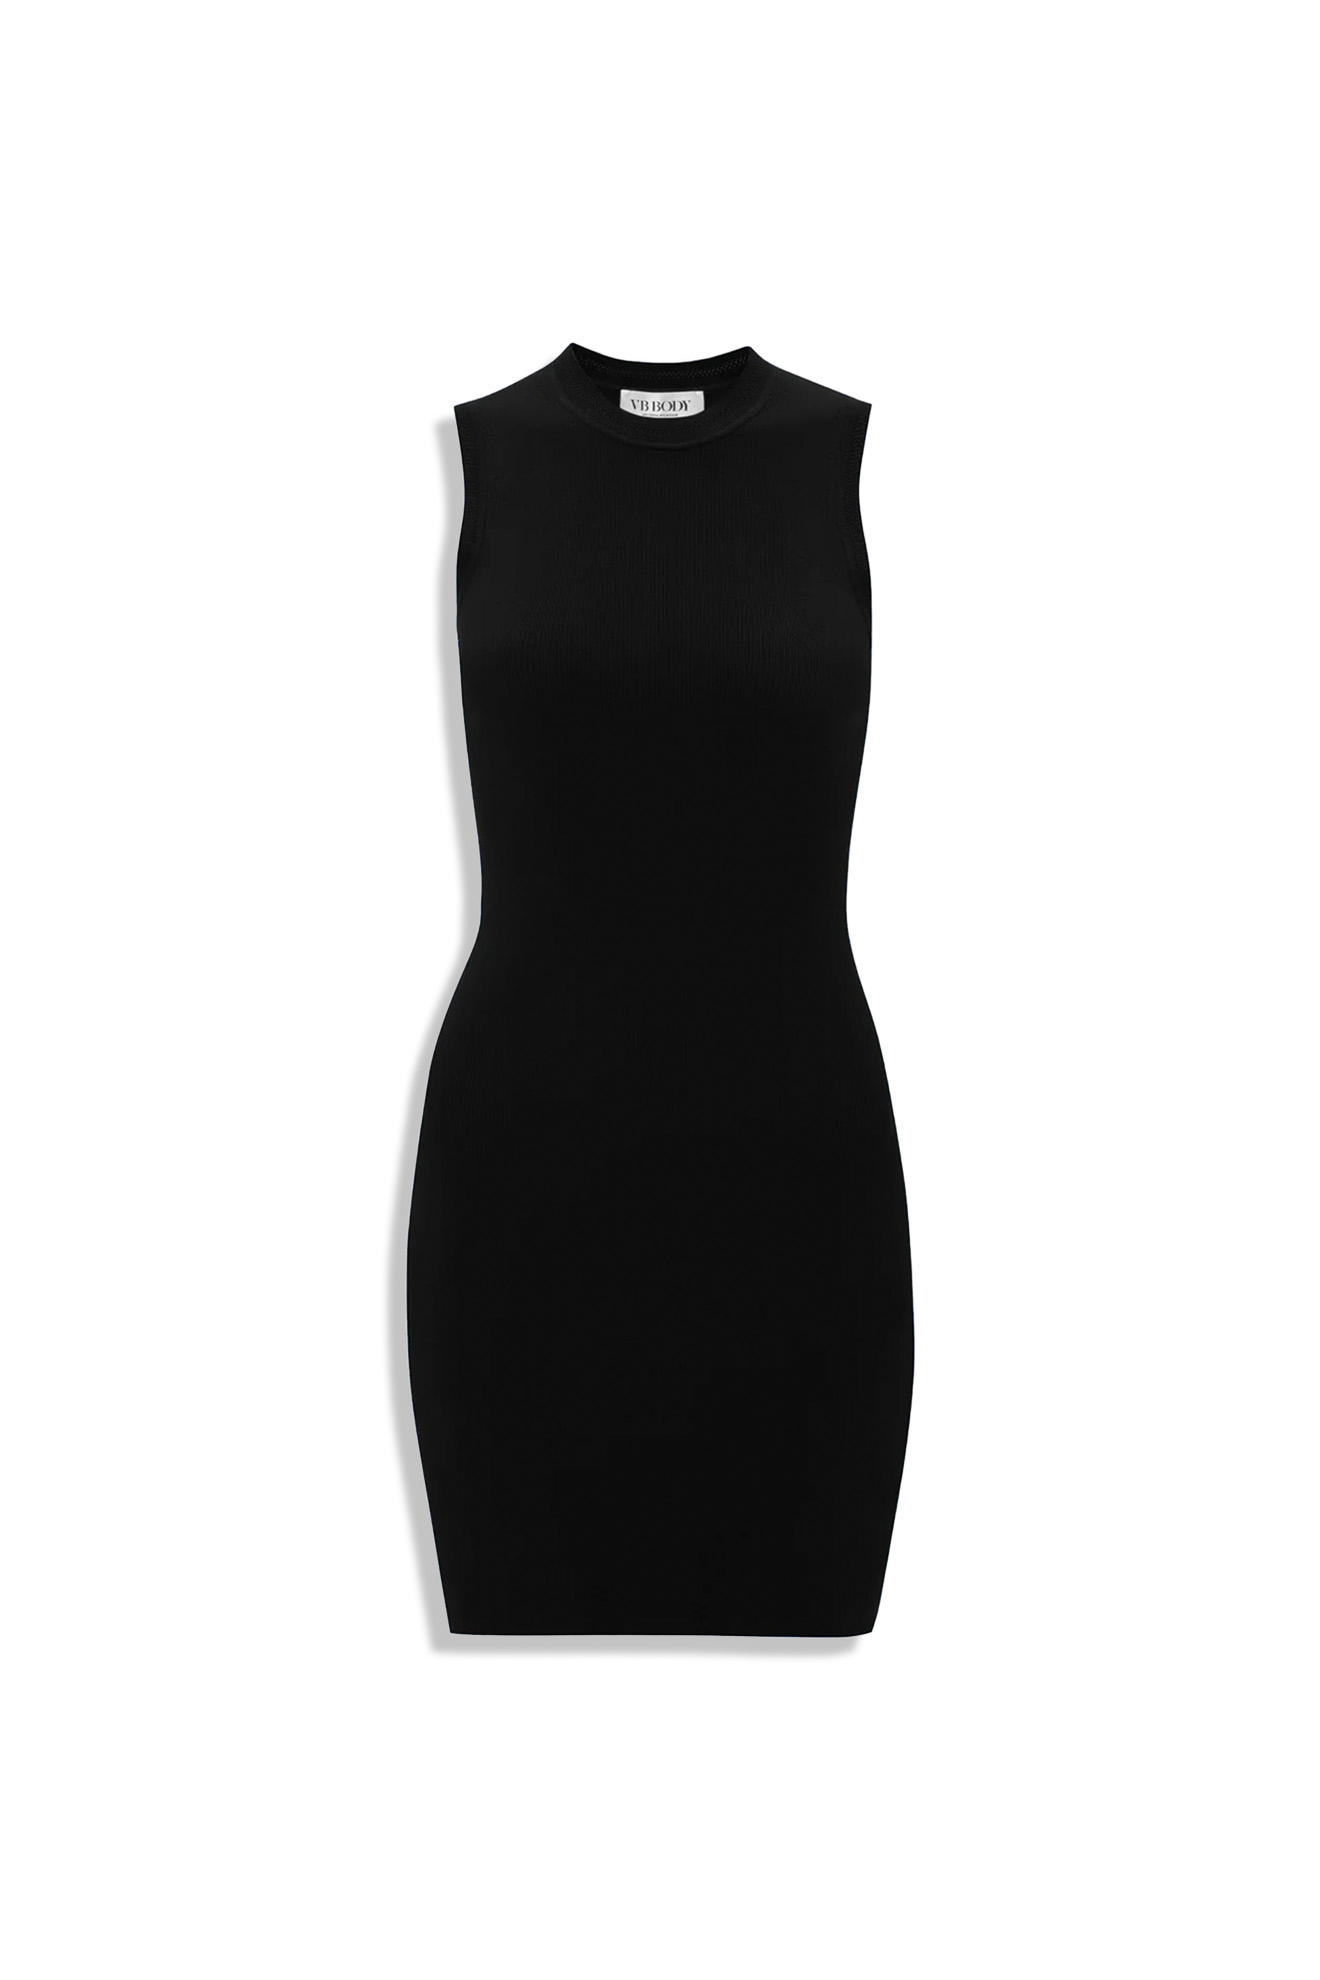 Victoria Beckham VB Body Mini Dress - Figure-hugging mini dress black 34